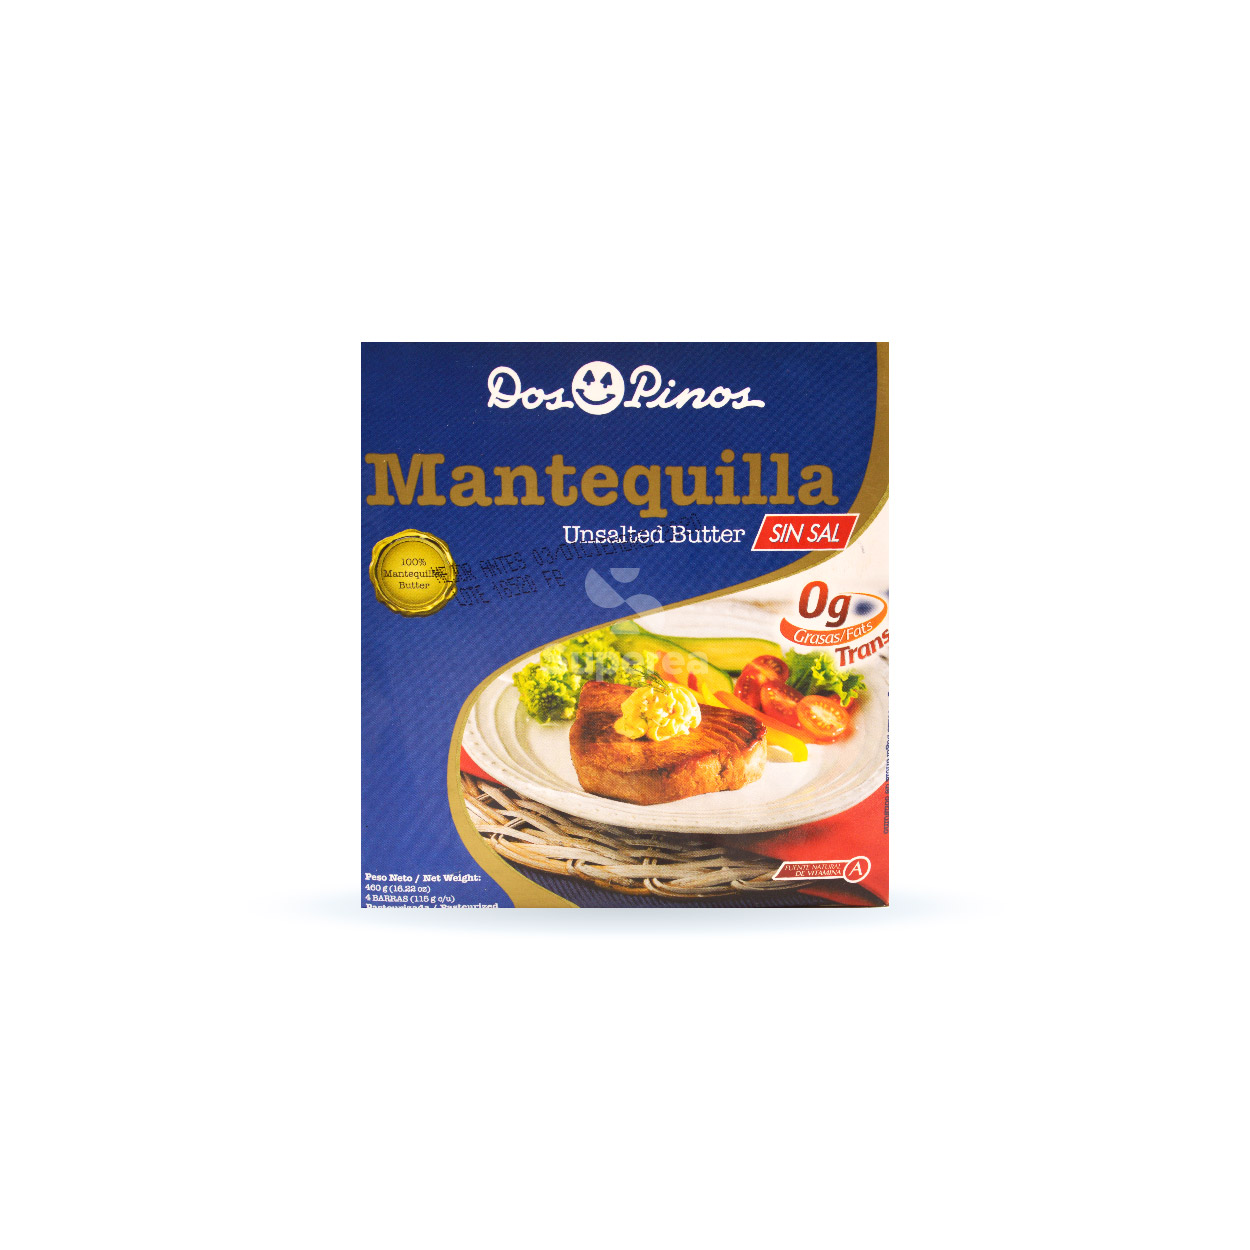 Margarina Rama Sin Sal x 440 gr - Supermercados Pacardyl